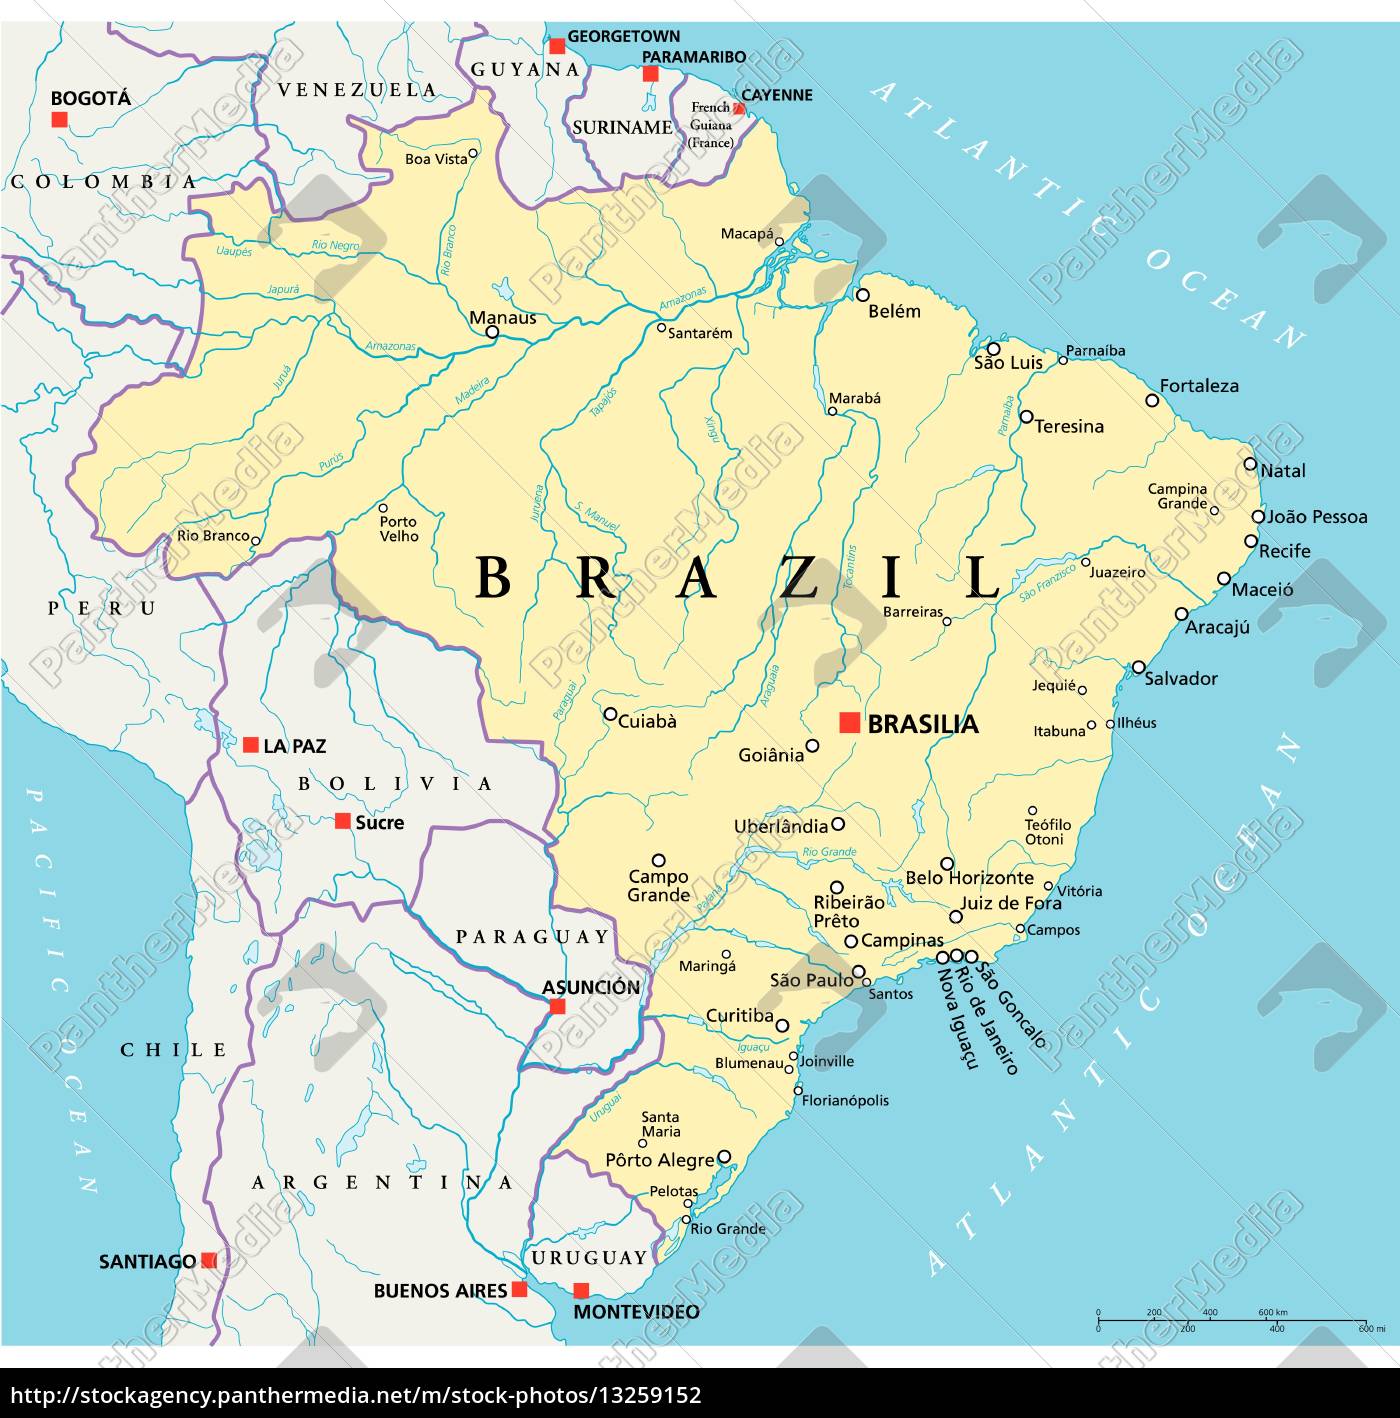 brasilien political map - Lizenzfreies Foto - #13259152 | Bildagentur